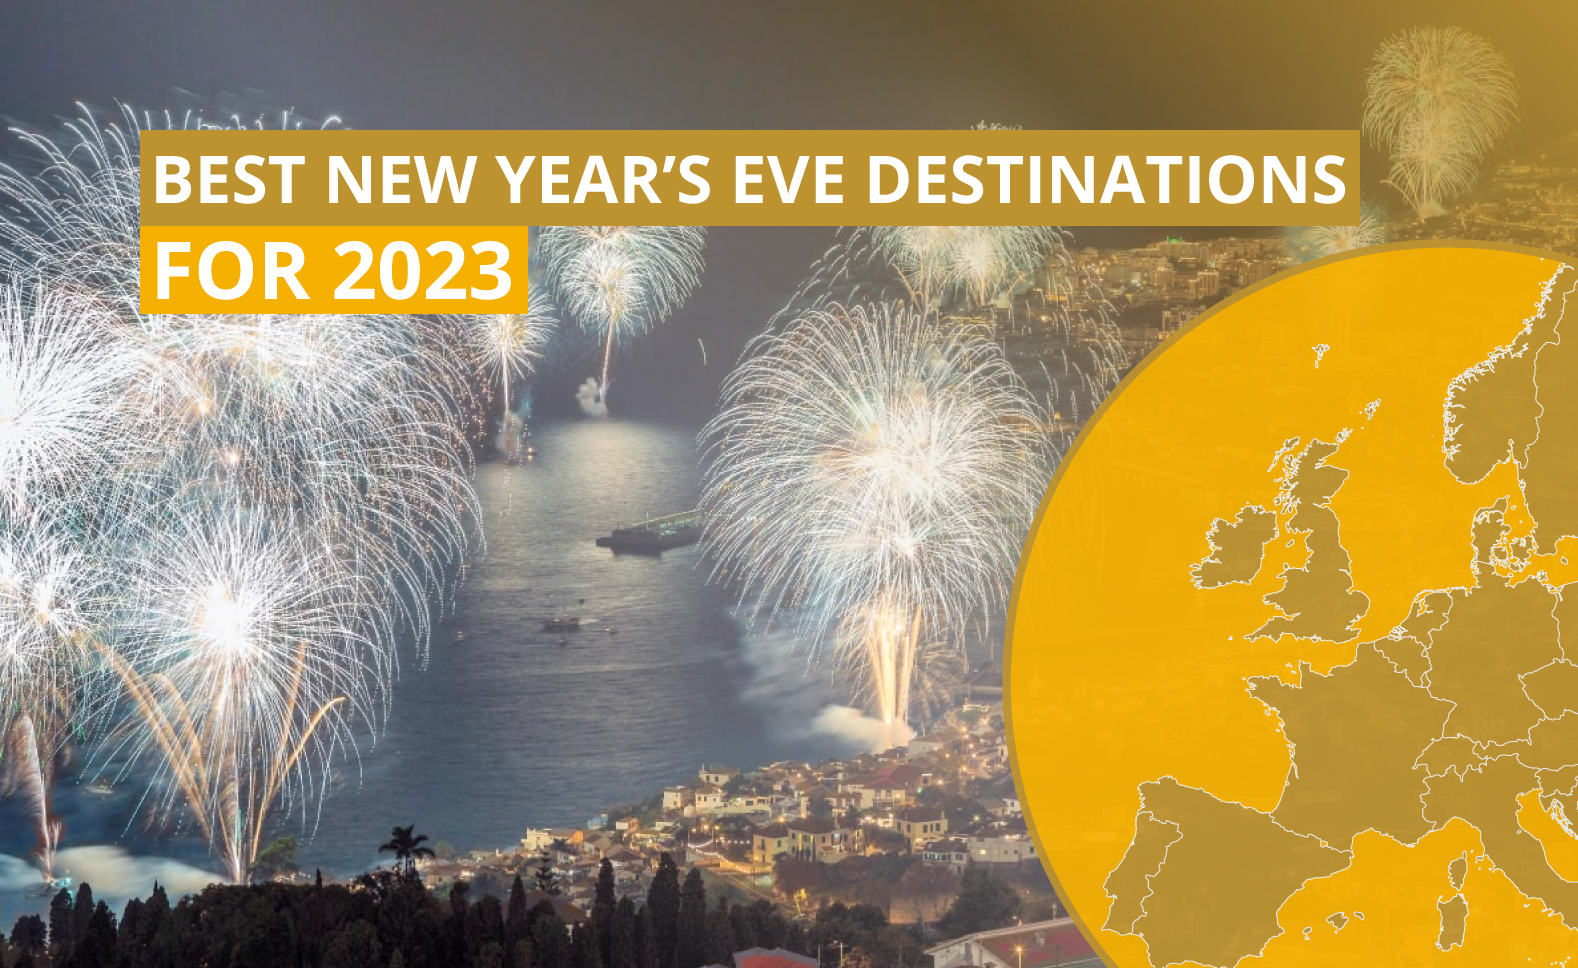 Musique Pour Nouvel an 2022 - Happy New Year Songs 2022 - Musique